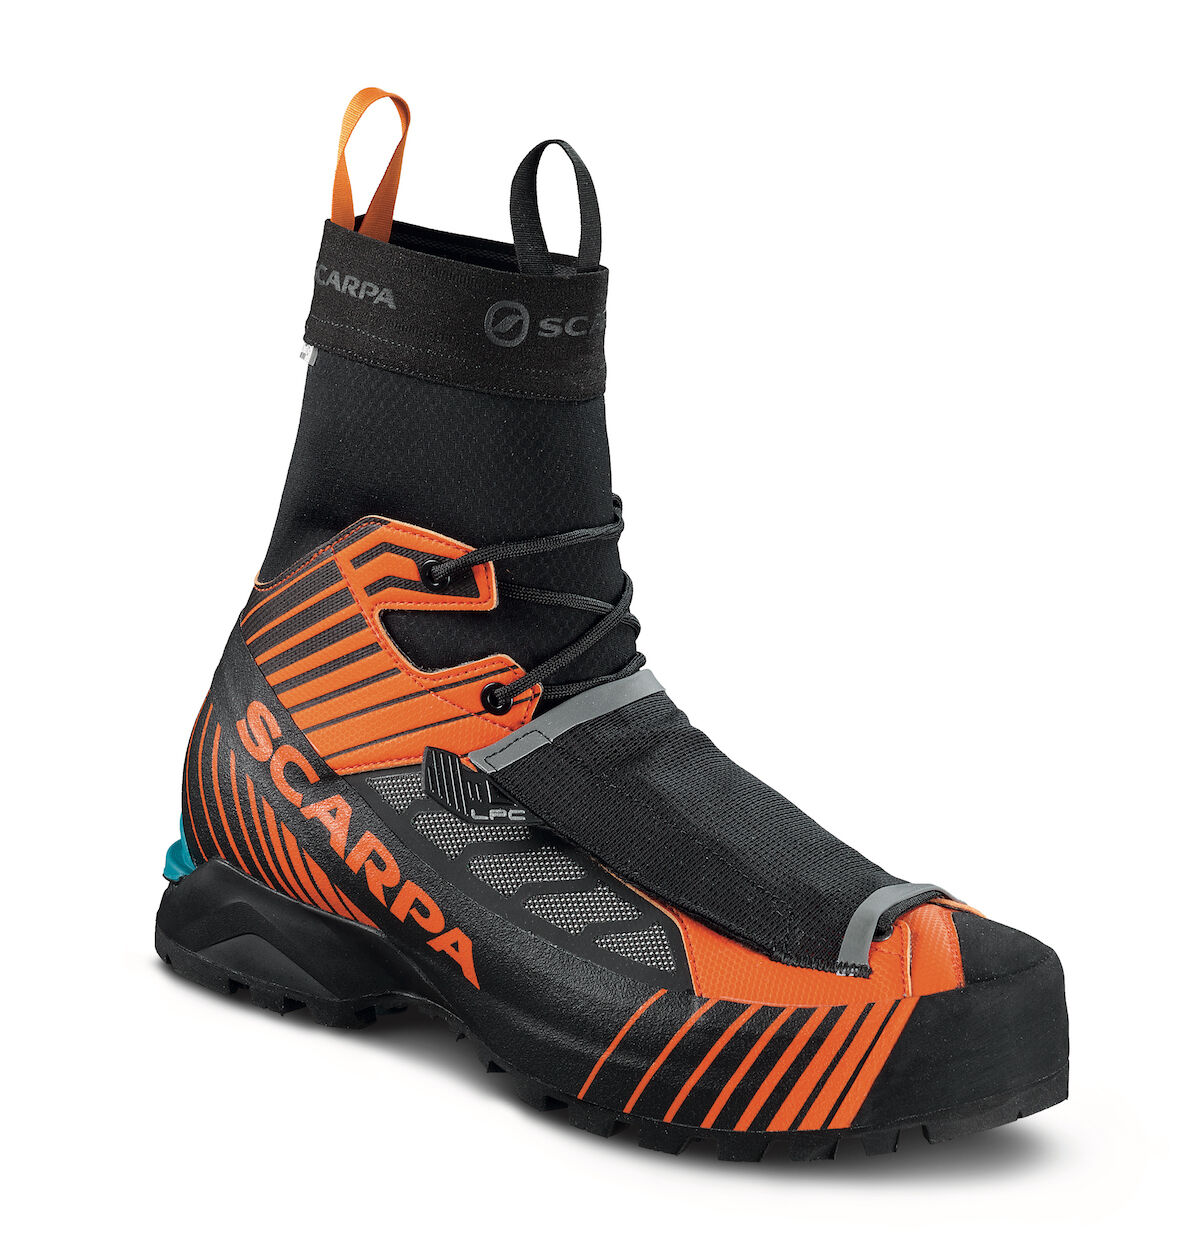 Scarpa - Ribelle Tech OD - Mountaineering Boots - Men's